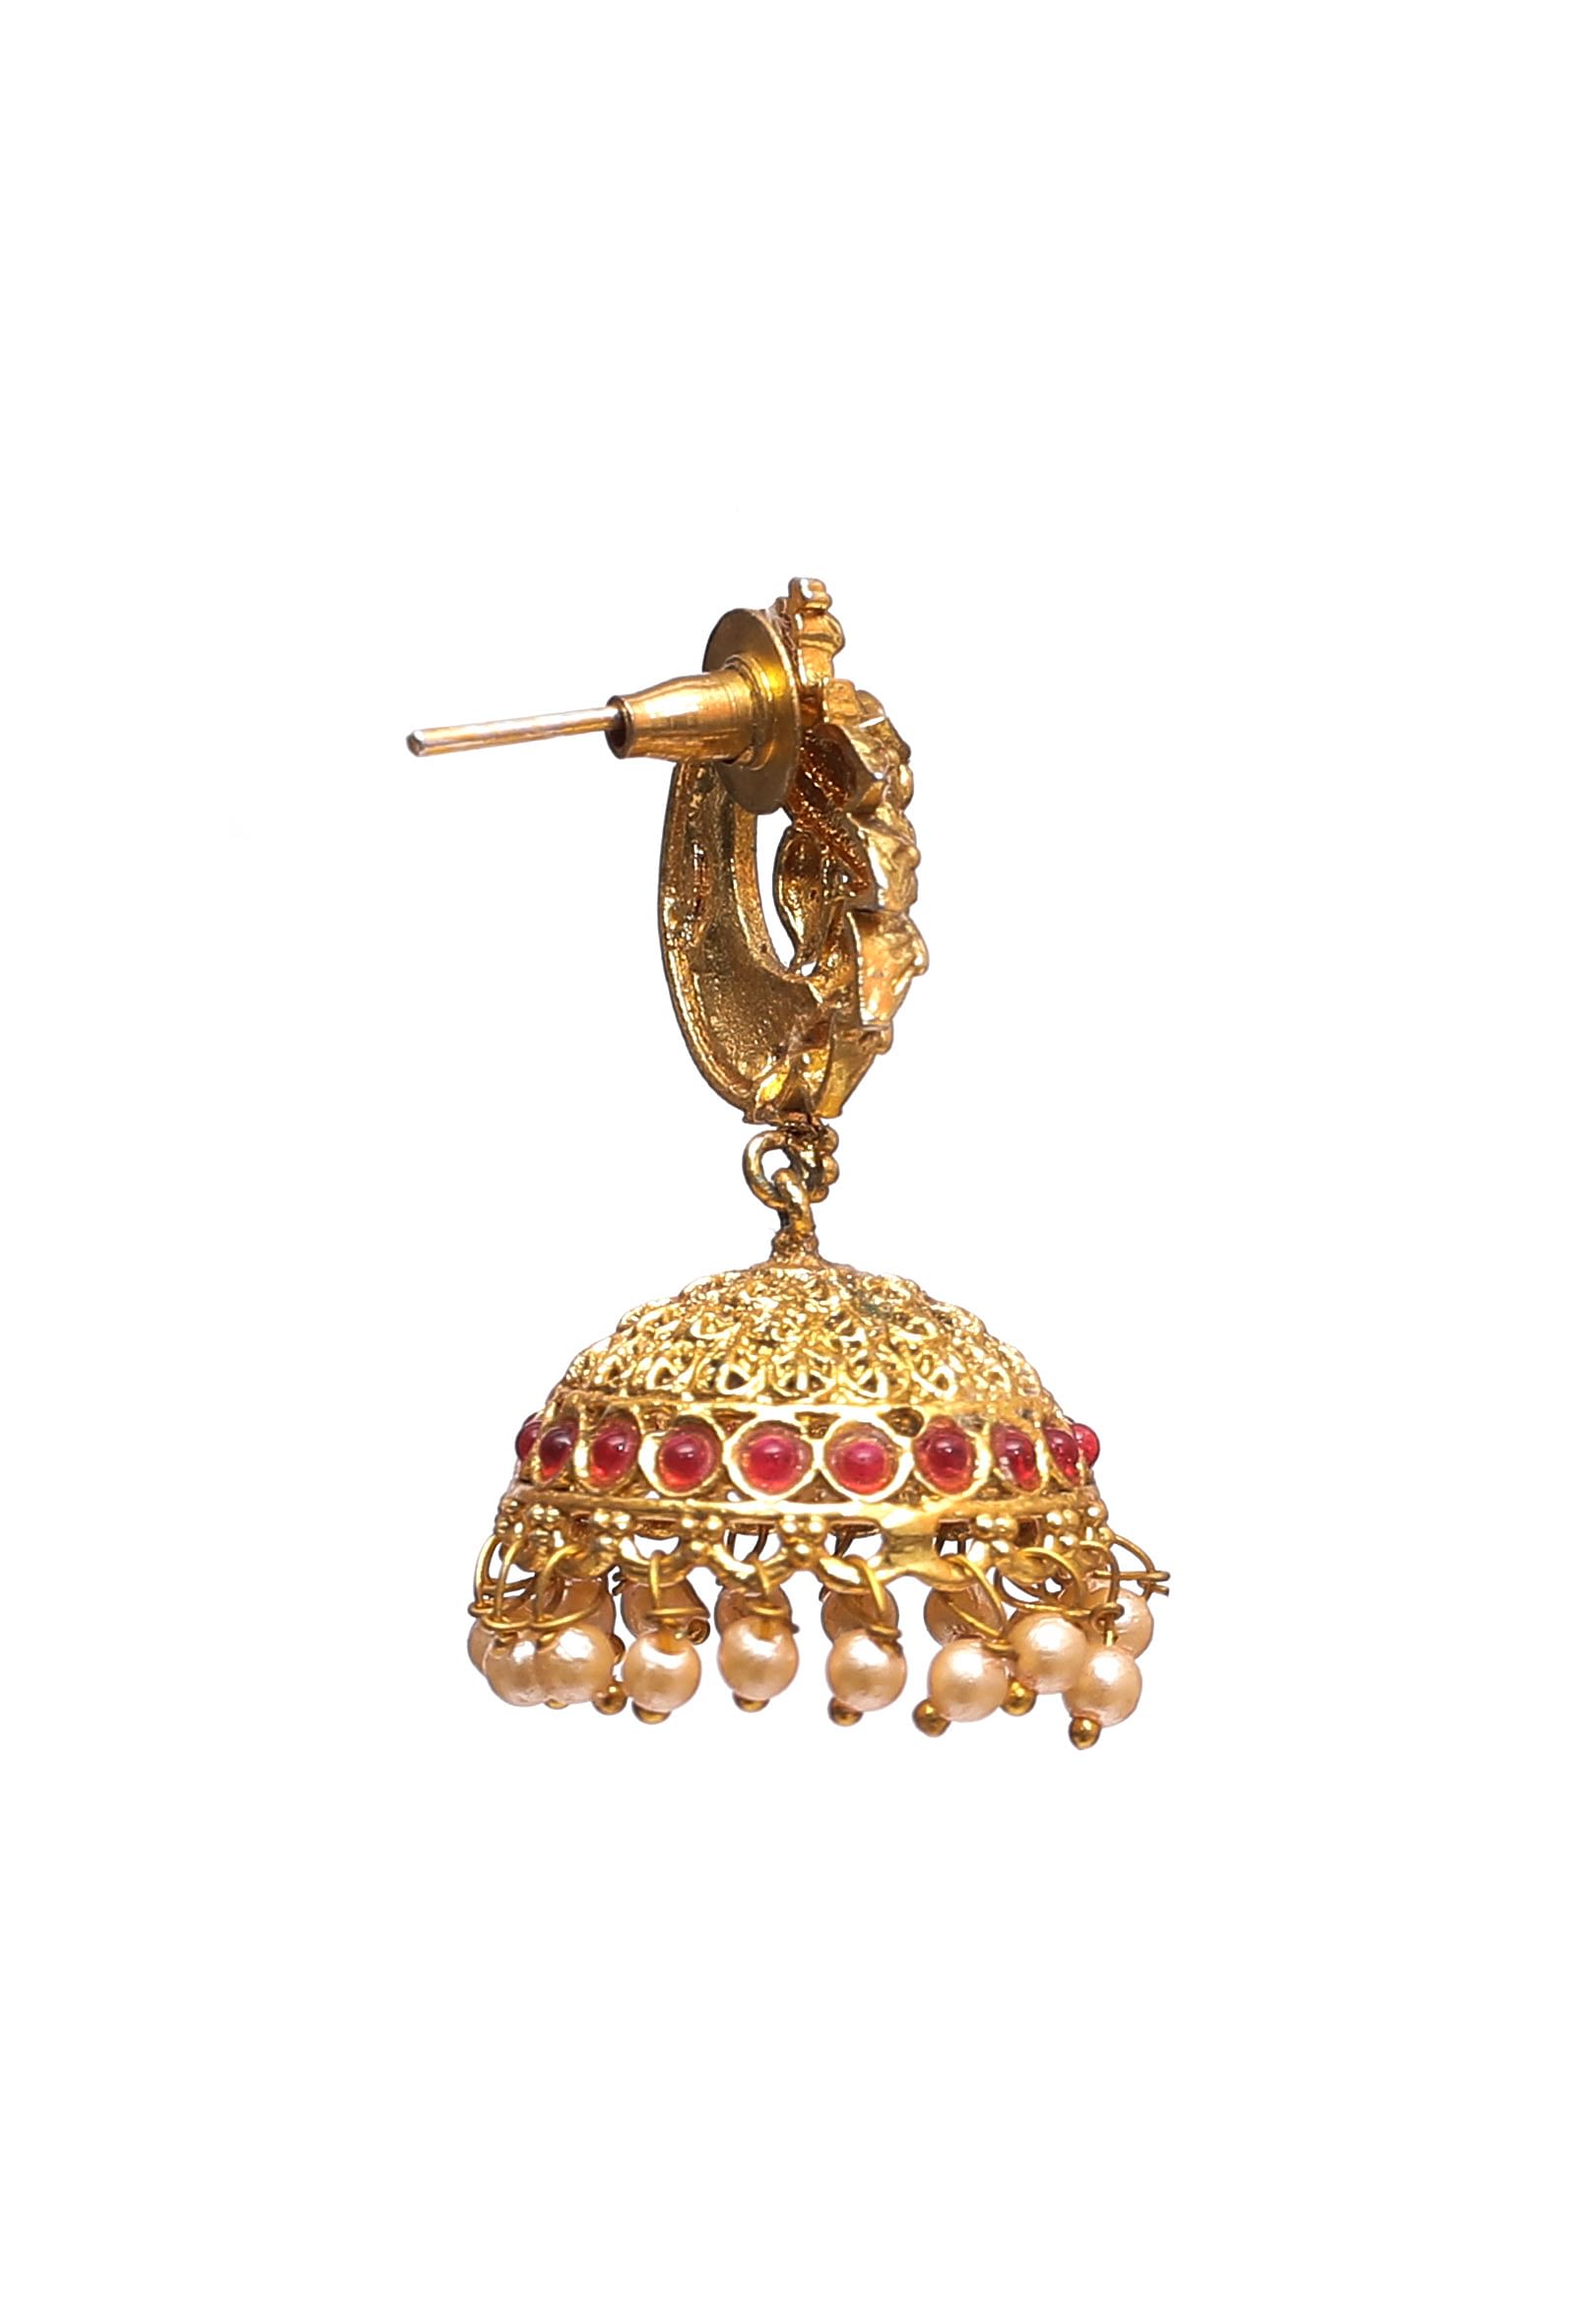 Gold & Pink Kundan Gold Earrings